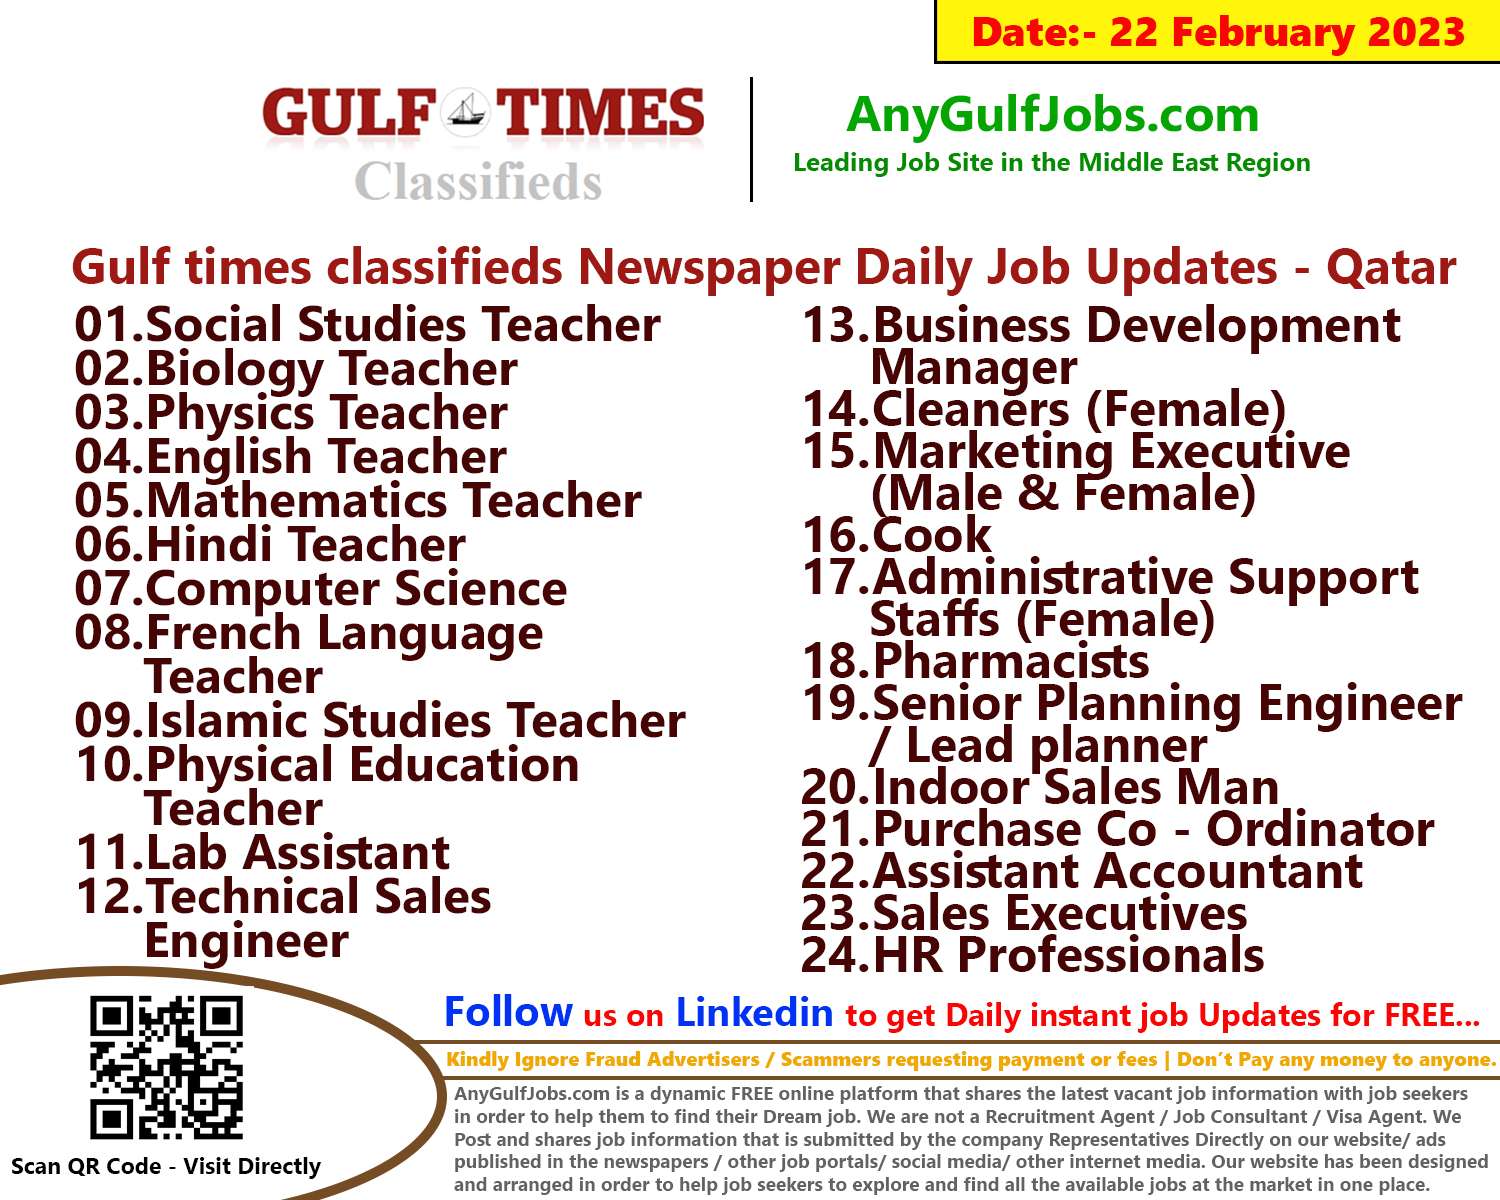 Gulf times classifieds Job Vacancies Qatar - 22 February 2023